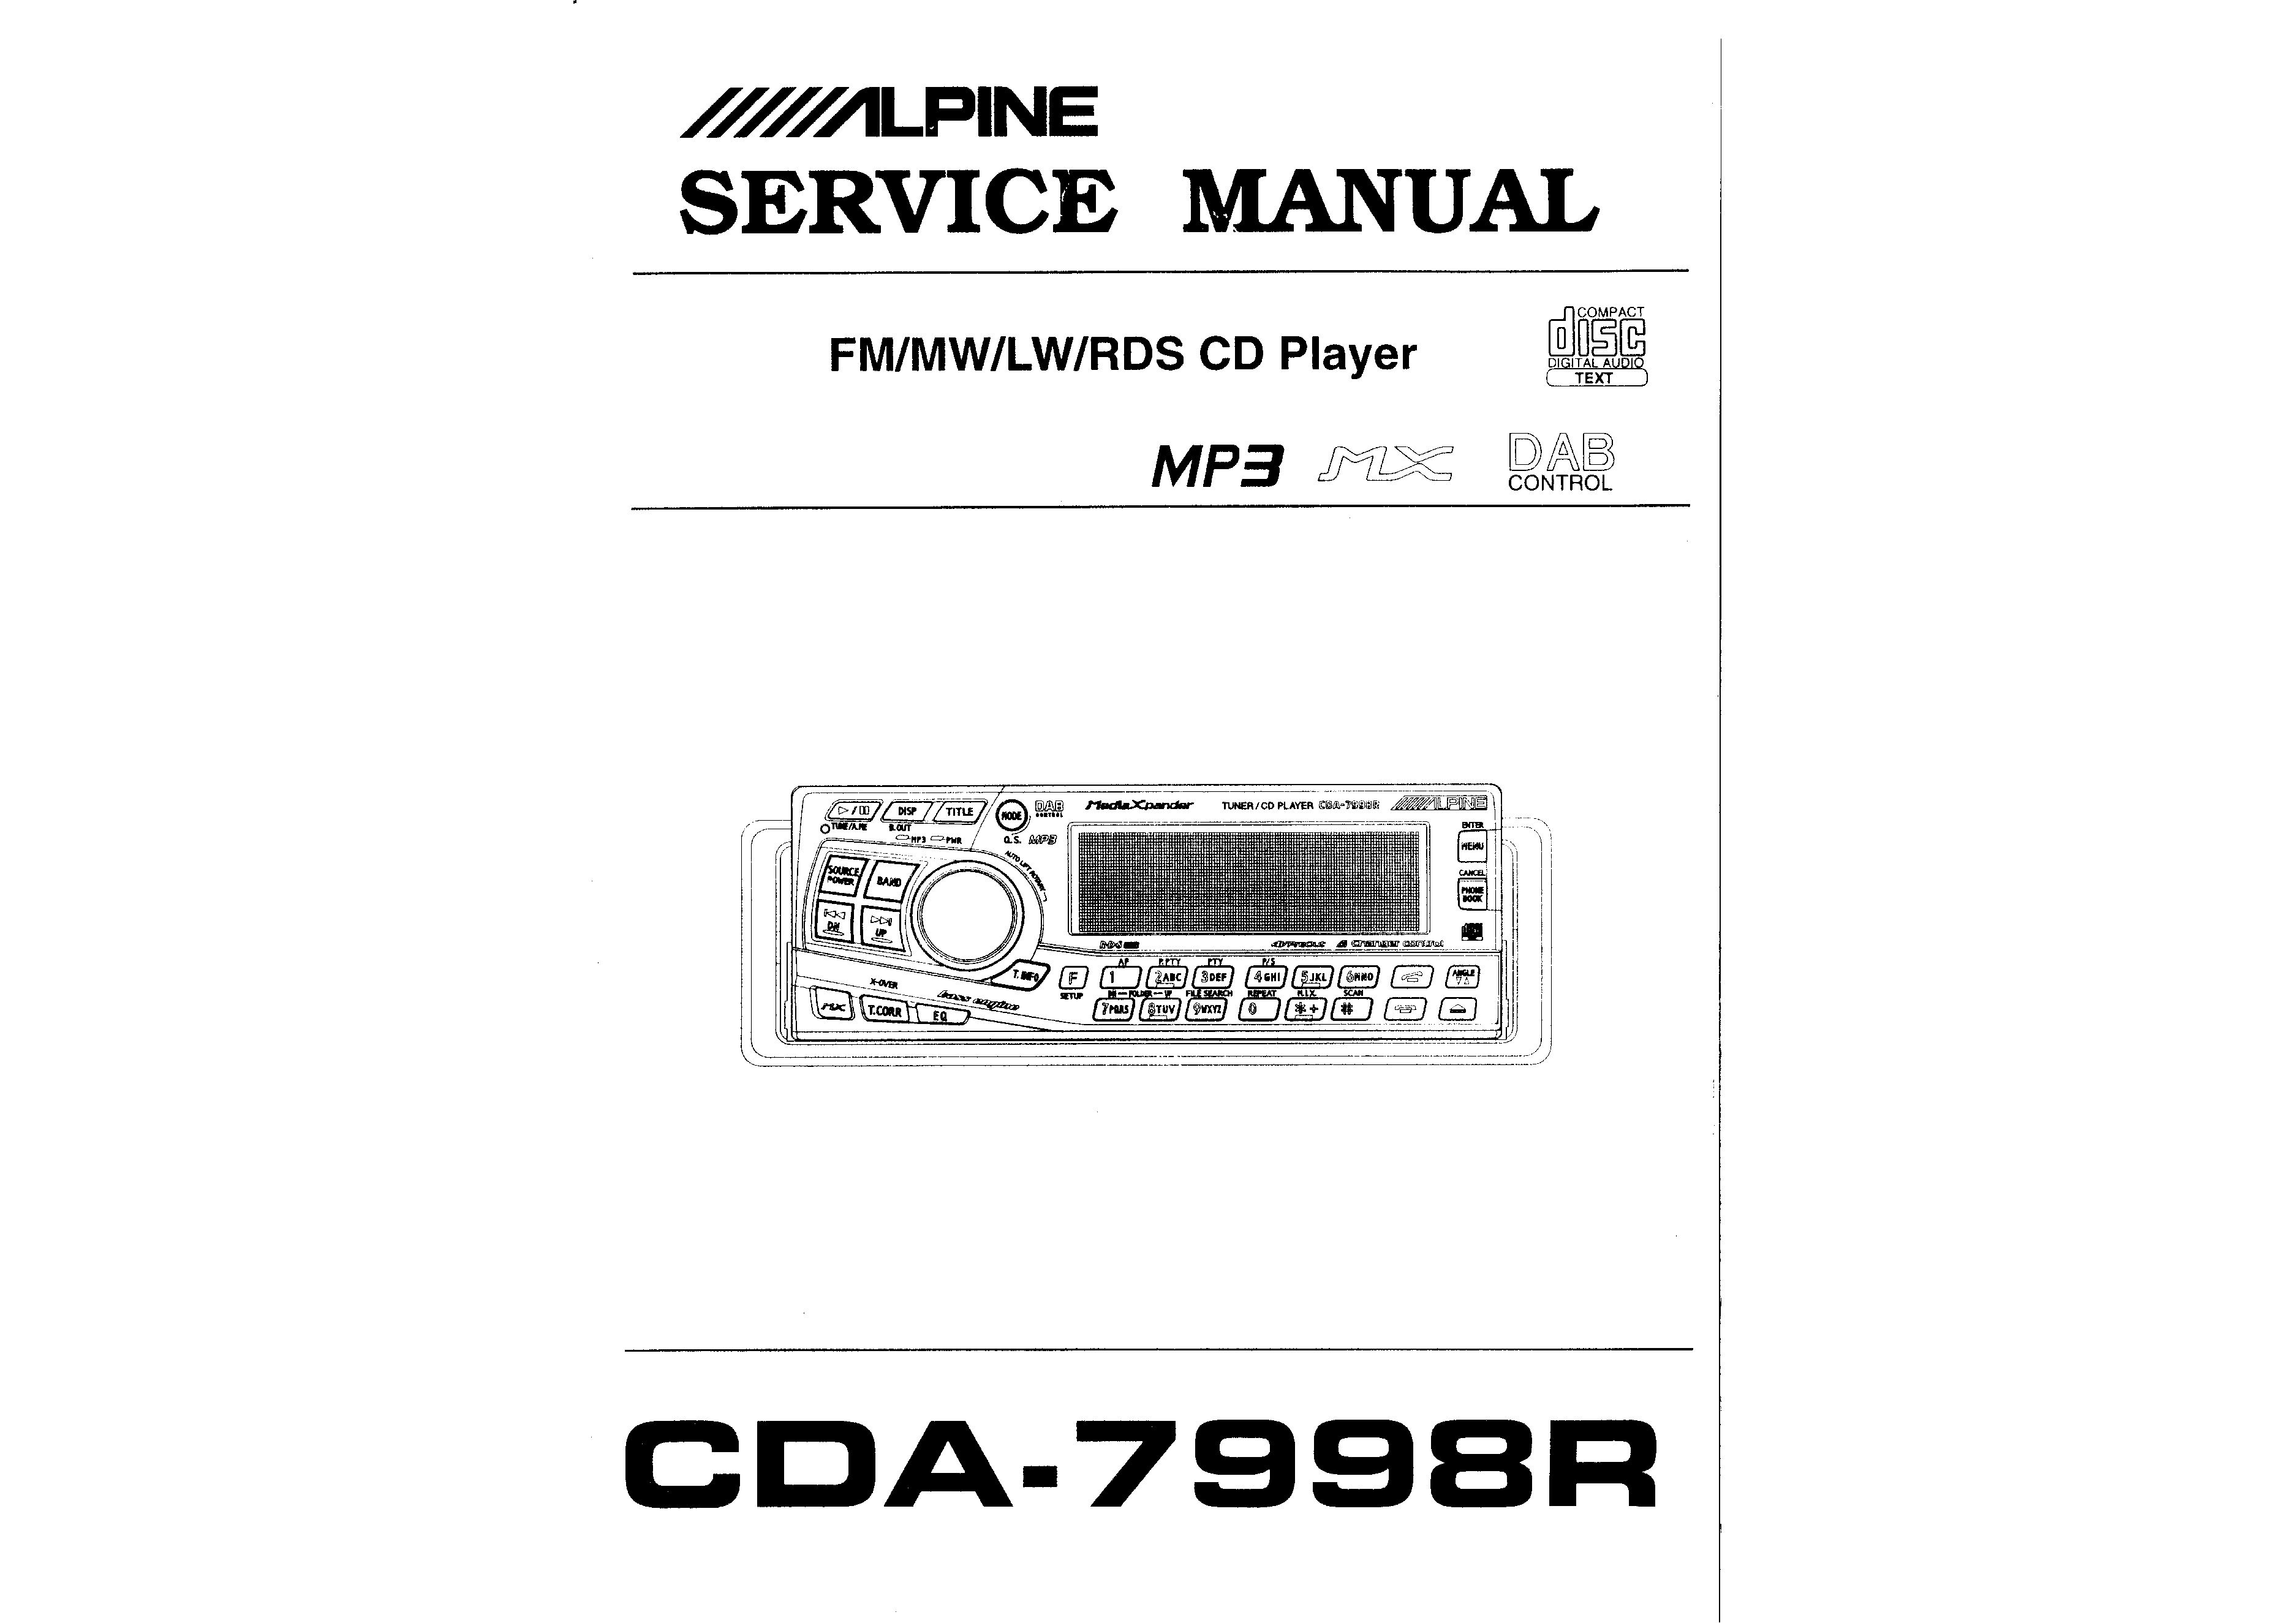 Service Manual for ALPINE CDA-7998R - Download